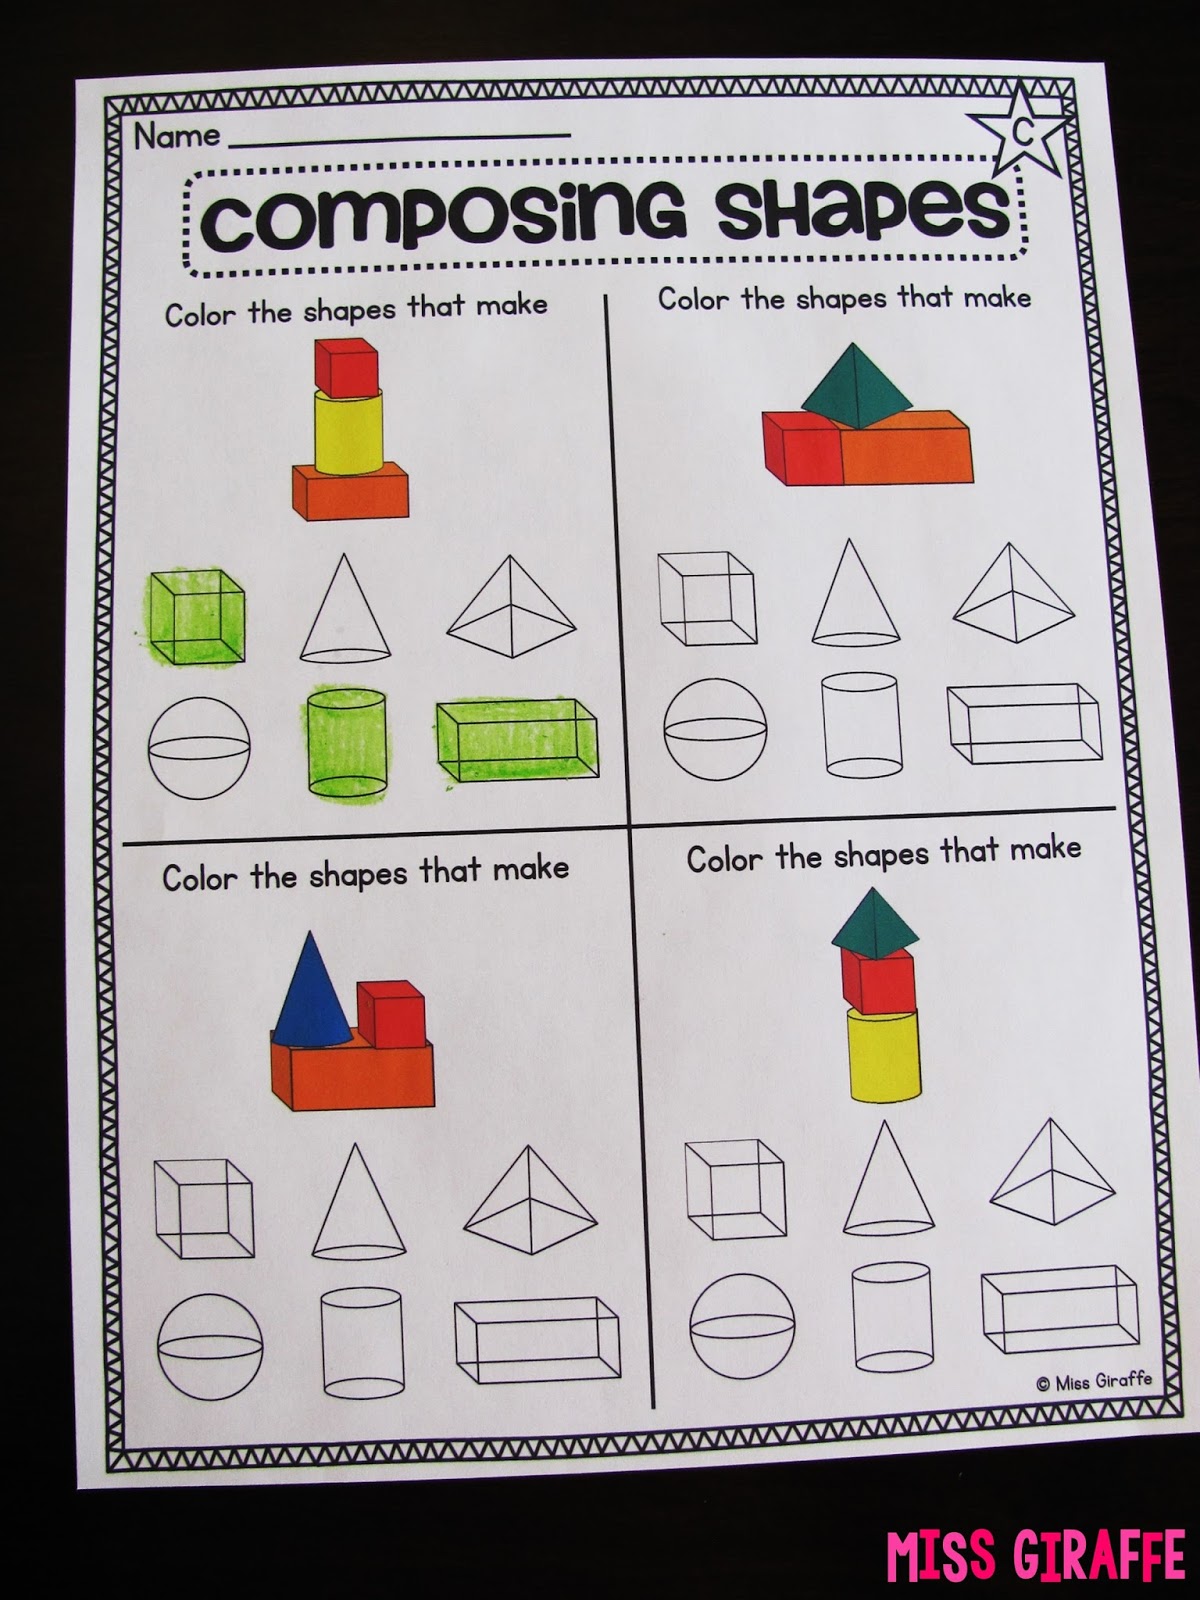 Miss Giraffe's Class: Composing Shapes in 1st Grade